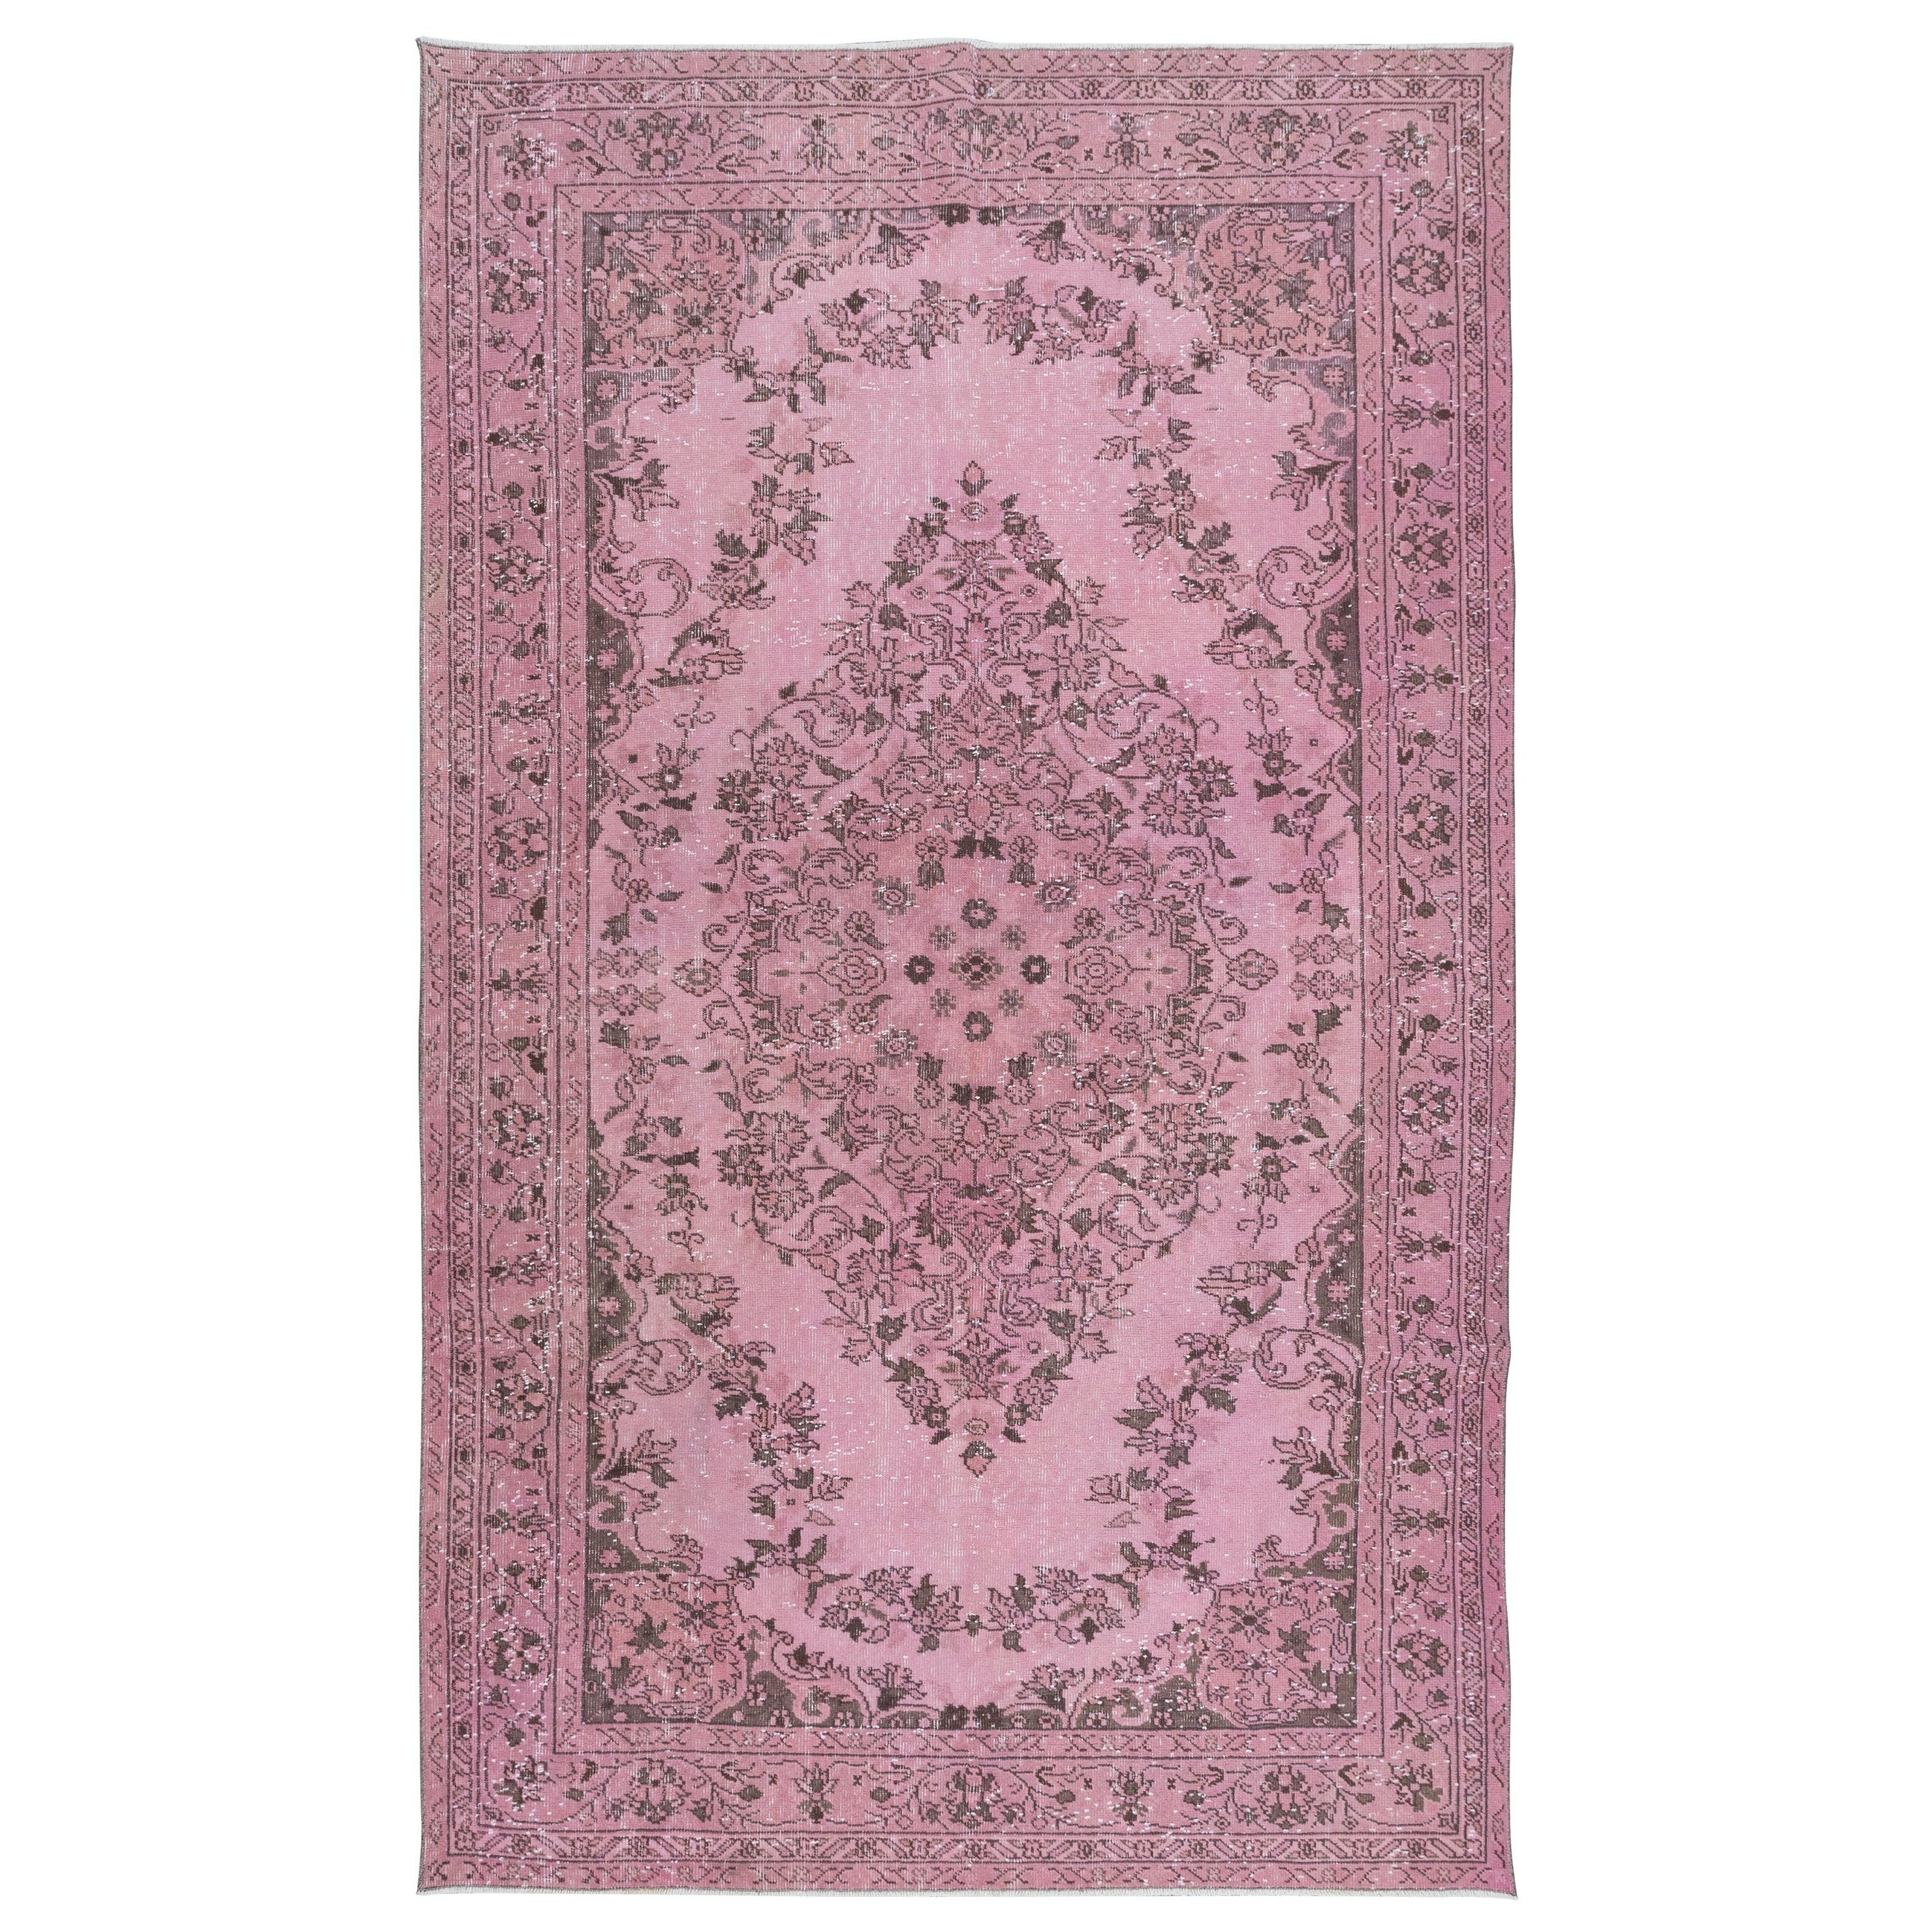 5.6x9.2 Ft Pink Handmade Turkish Area Rug, Bohem Eclectic Room Size Carpet For Sale